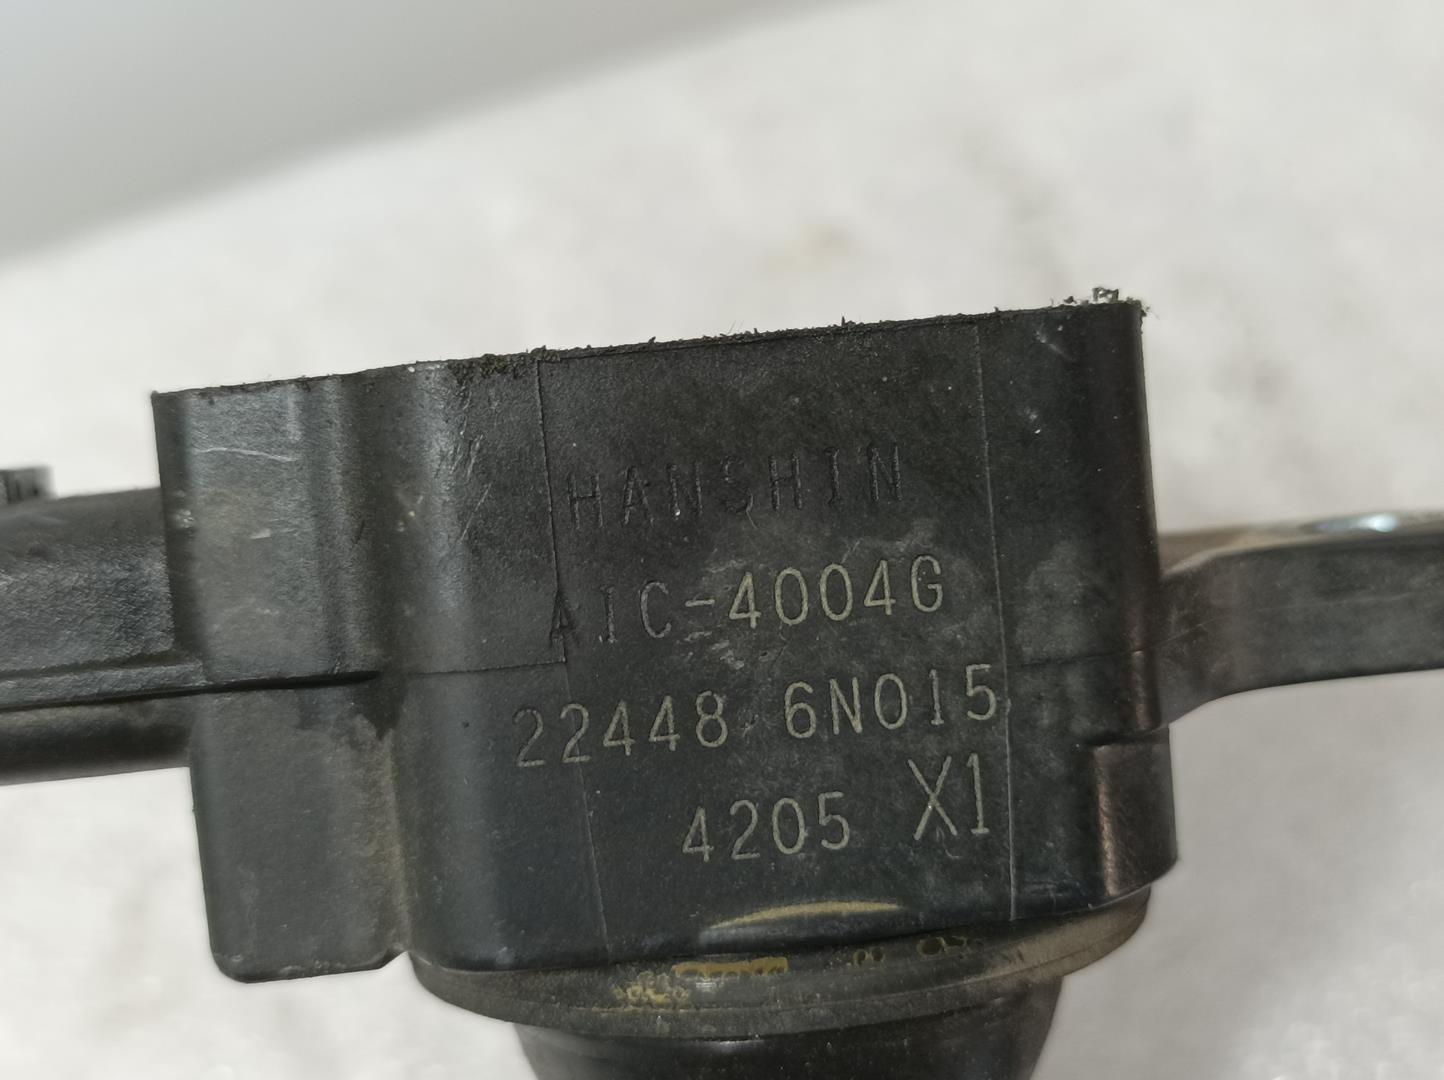 NISSAN Almera N16 (2000-2006) High Voltage Ignition Coil 224496N015, HANSHIN 23621465